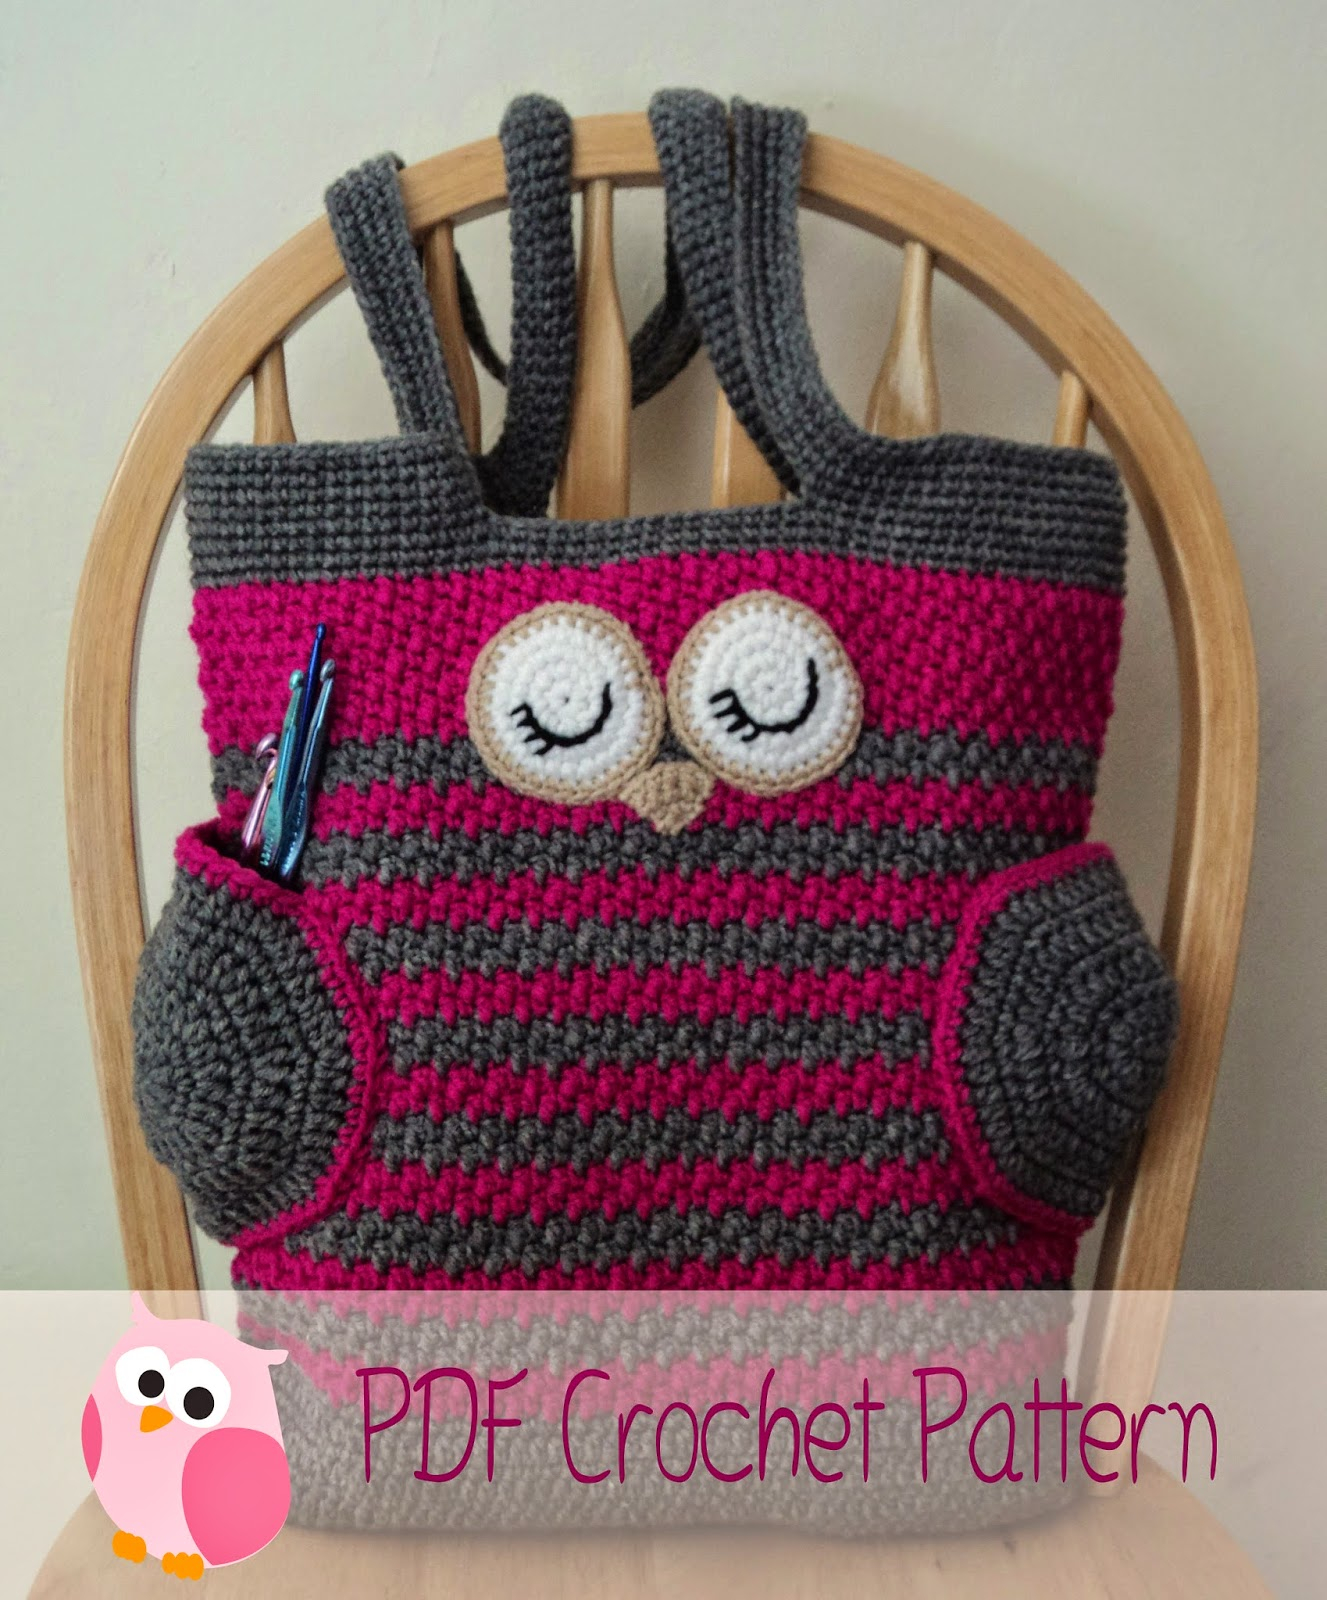 Crochet Purse Patterns 29 Crochet Bag Patterns Guide Patterns